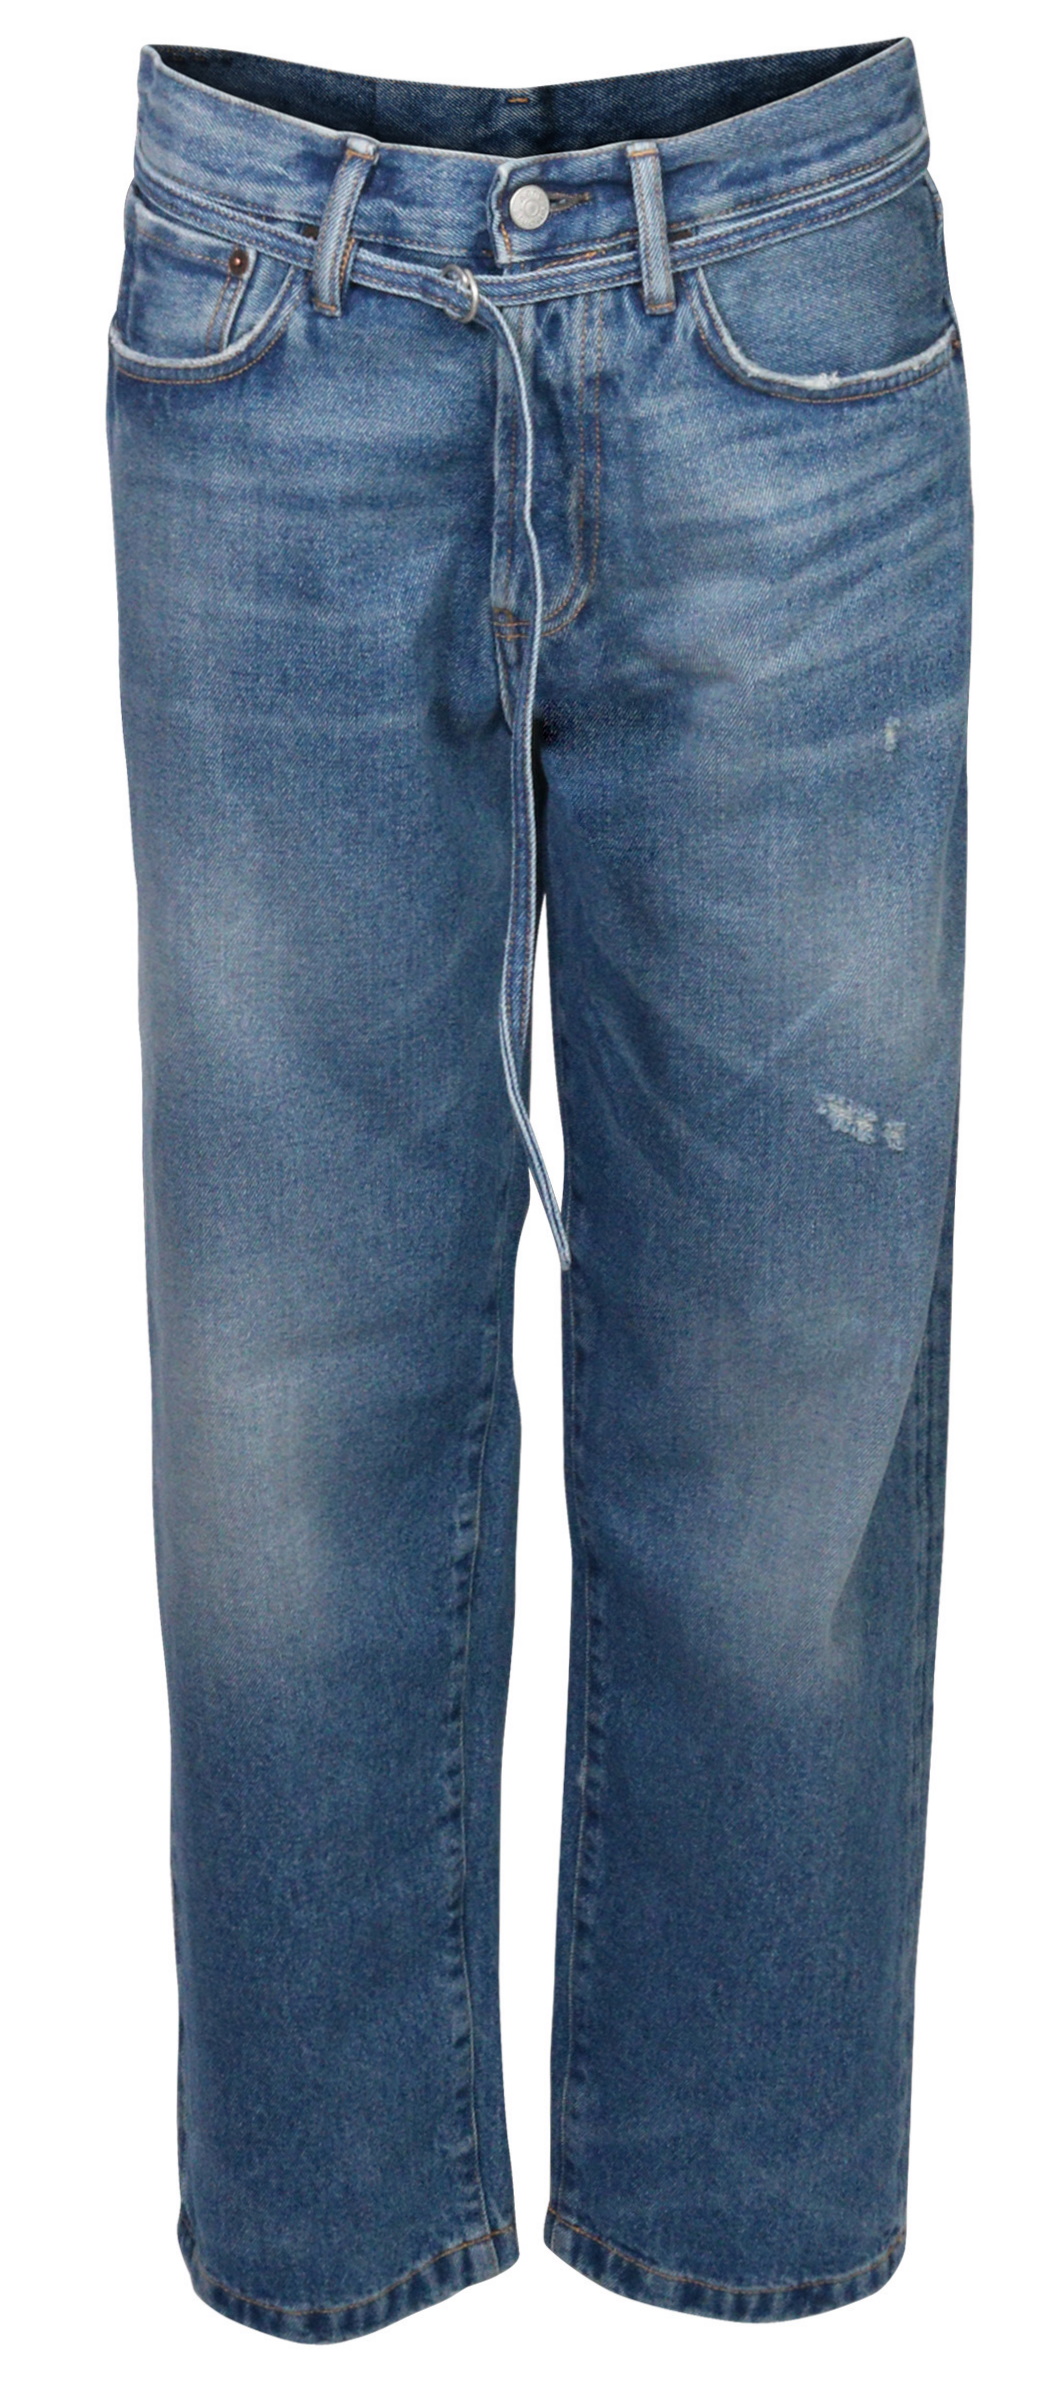 Acne Studios Jeans 1991 Toj Jeans Vintage Mid Blue 30/32